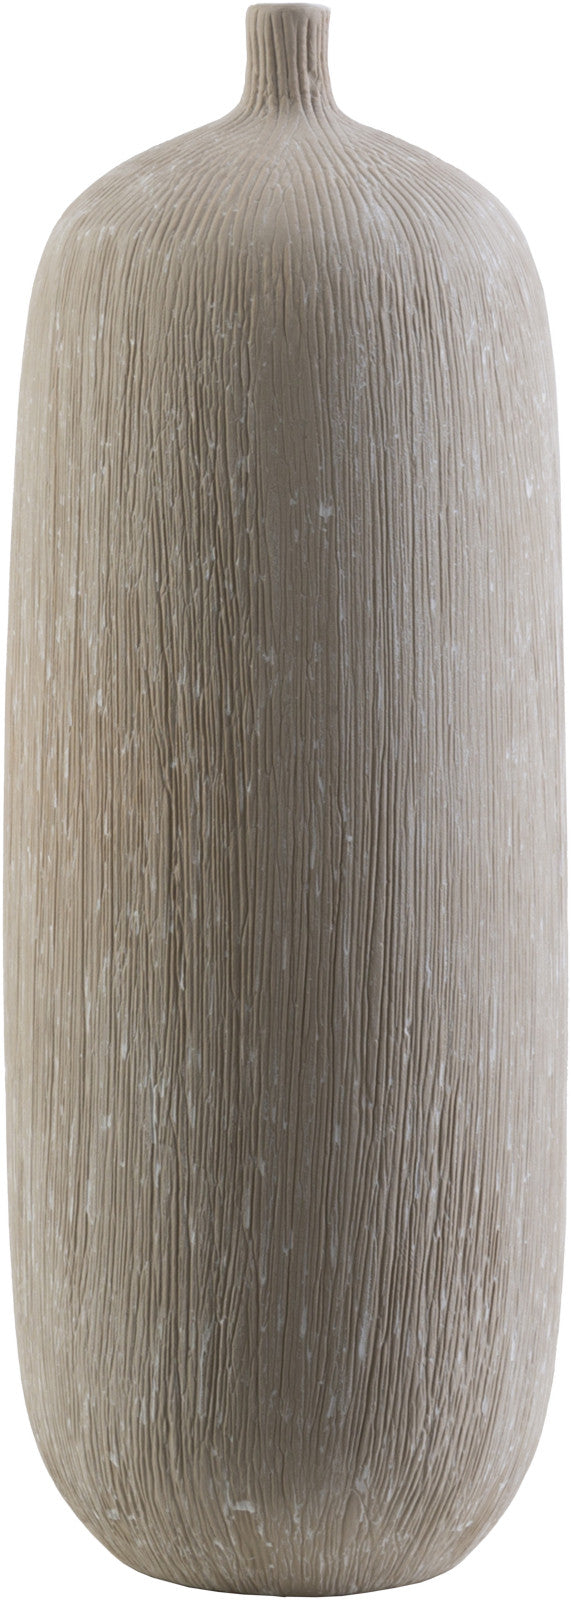 Surya Bautista BAU-705 Vase Table Vase 4.41 X 4.41 X 12.4 inches